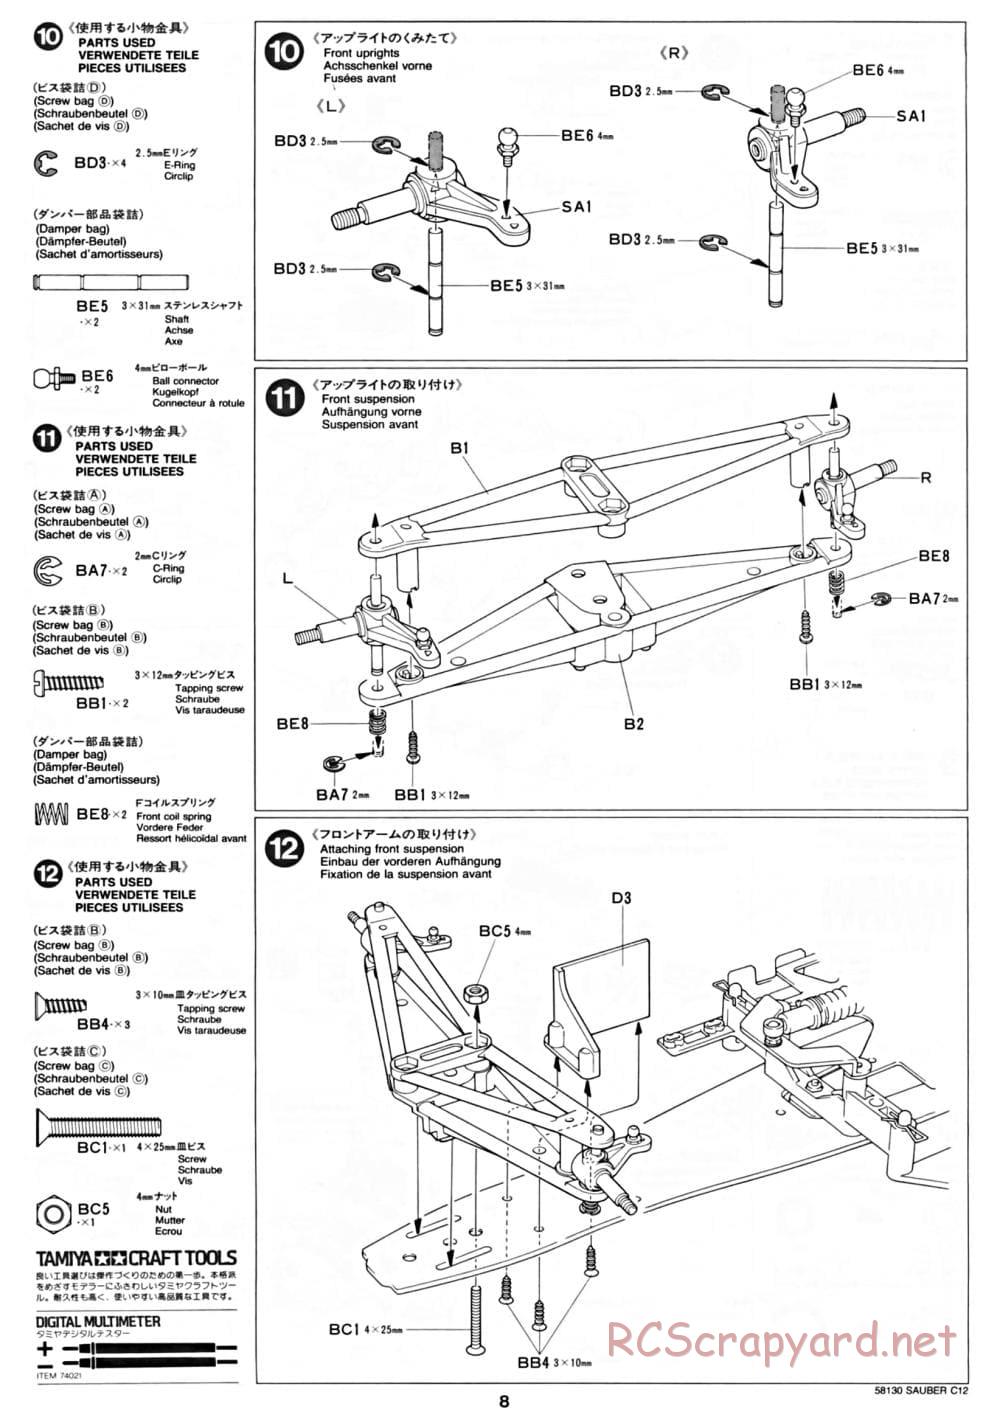 Tamiya - Sauber C12 - F103 Chassis - Manual - Page 8